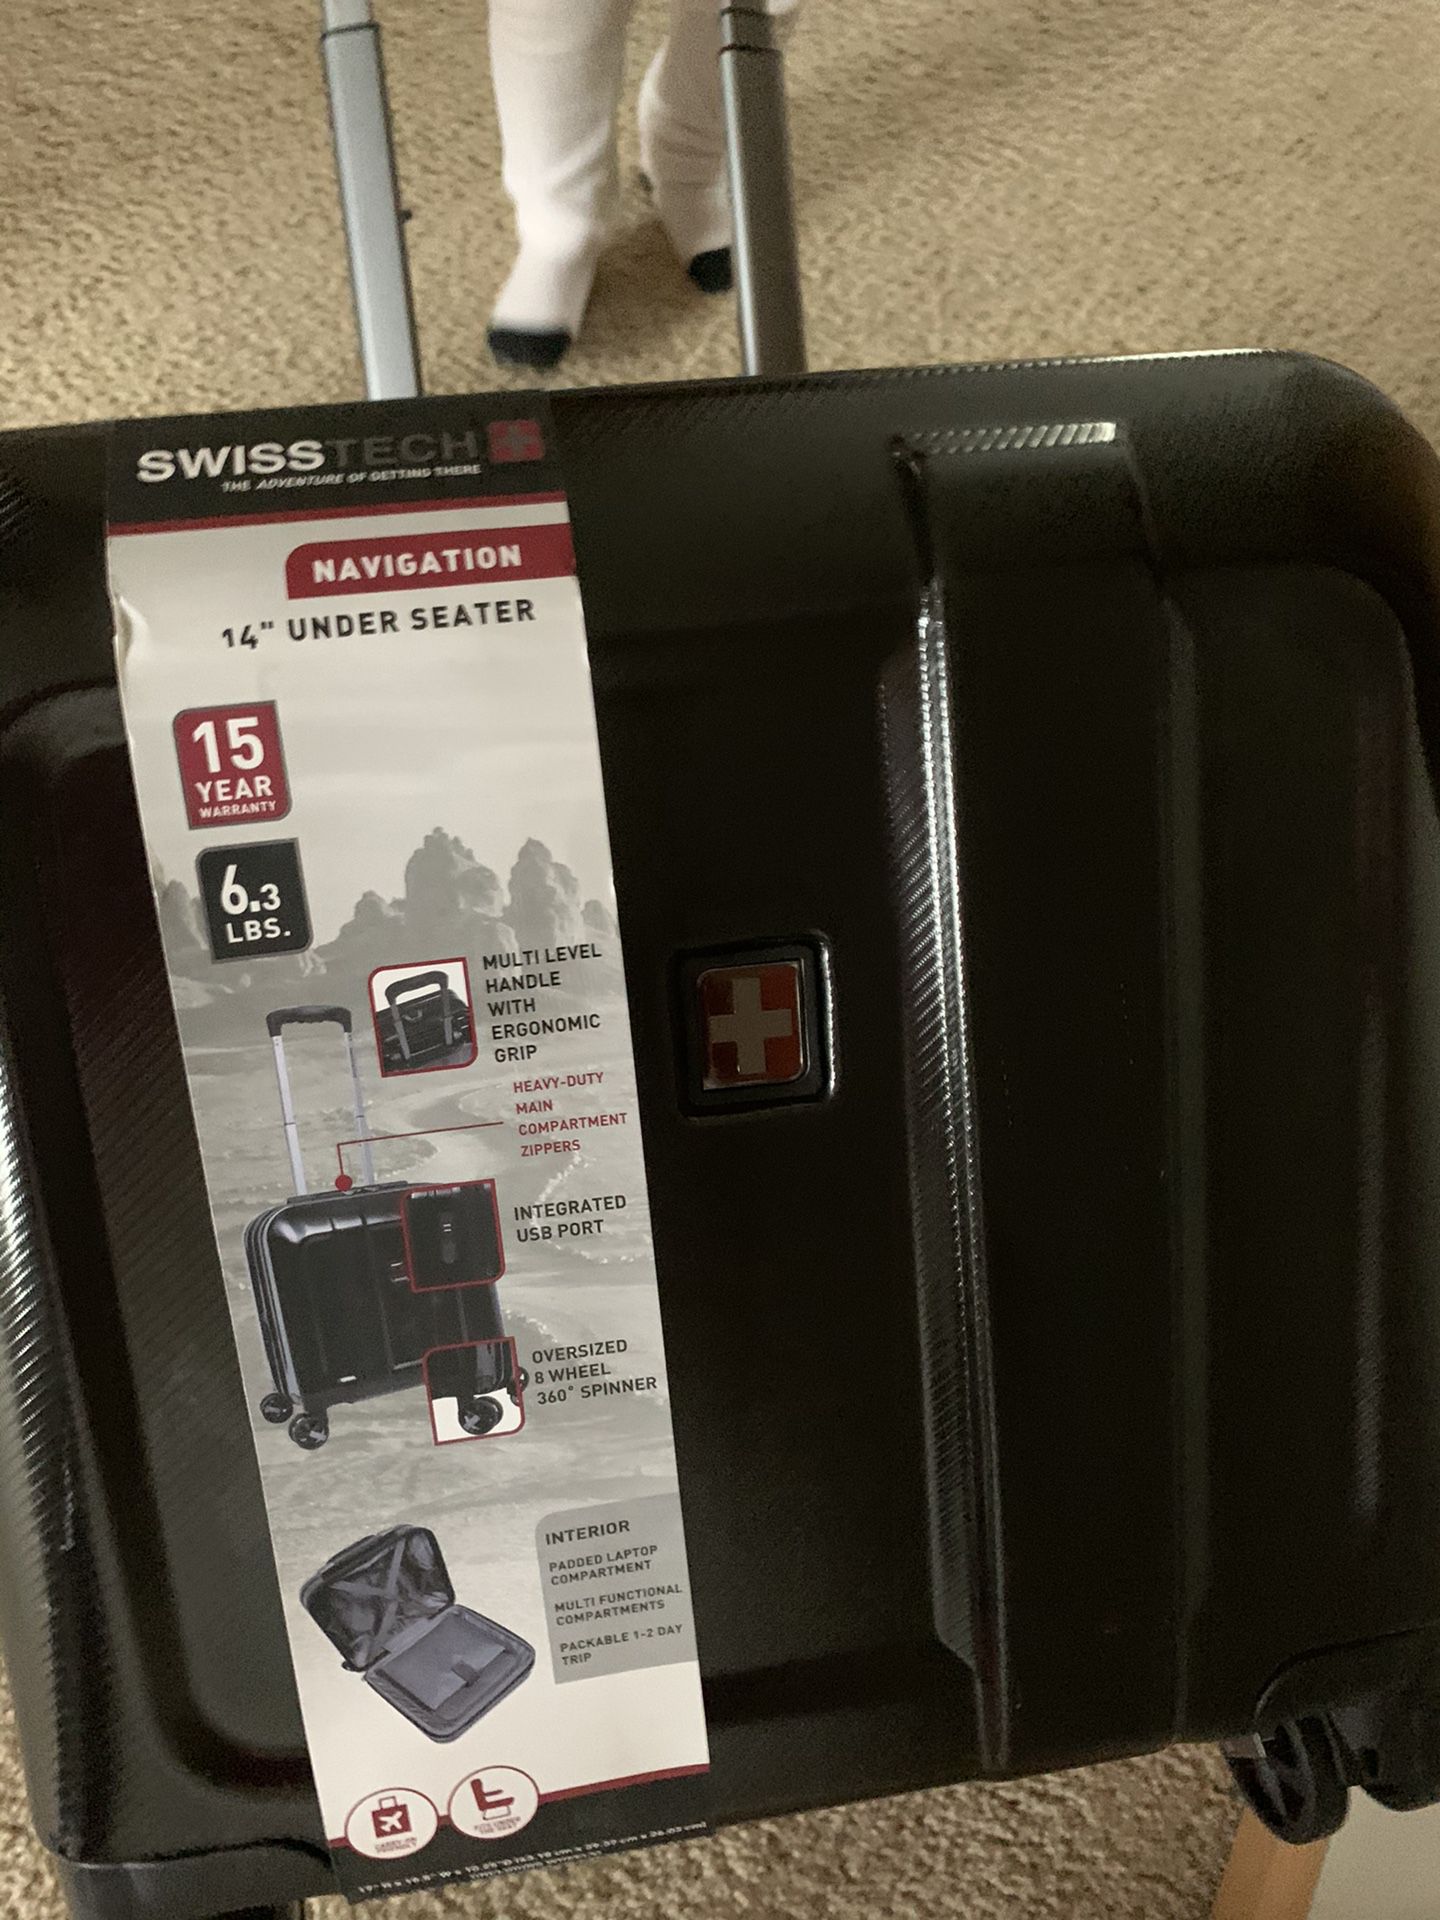 Swiss tech luggage